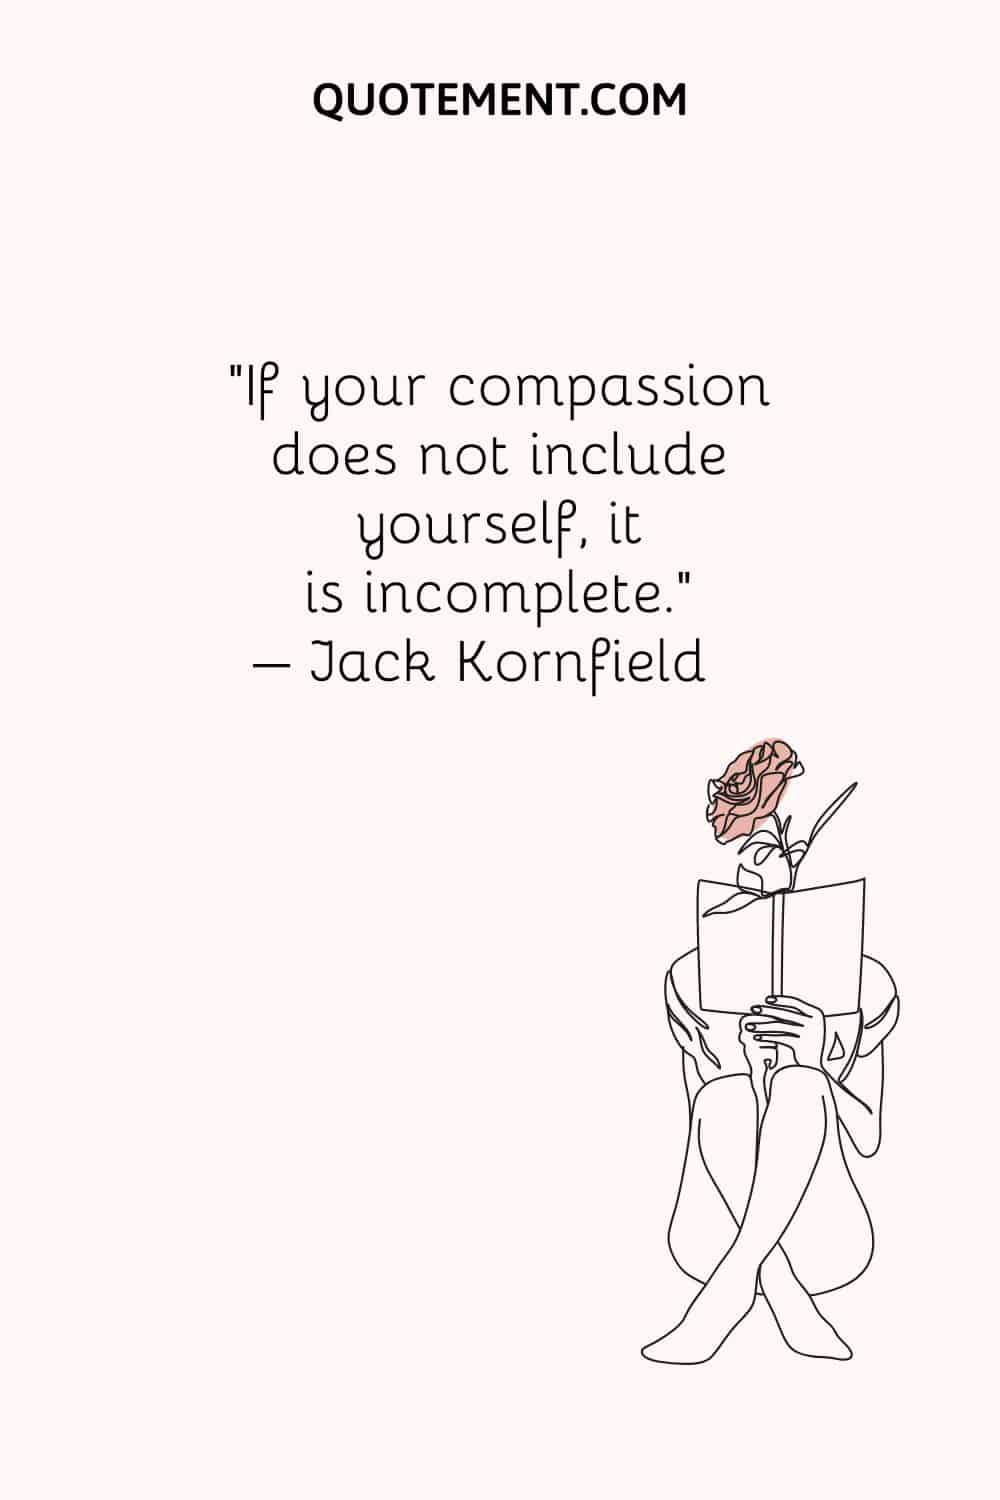 Si tu compasión no te incluye a ti mismo, está incompleta